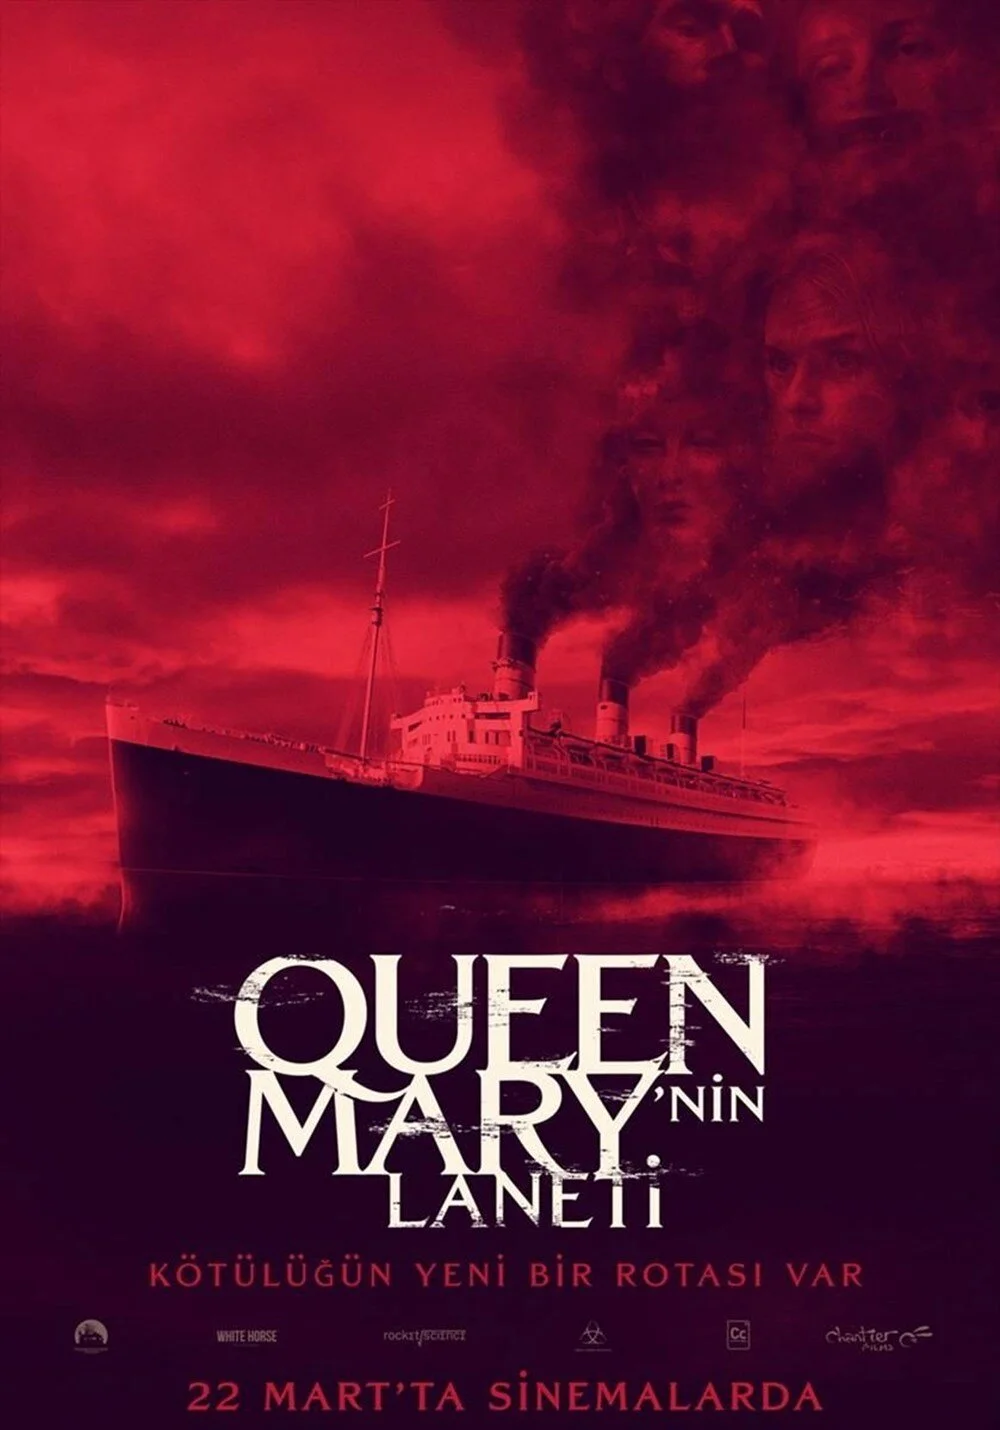 Queen Mary'ni̇n Laneti̇